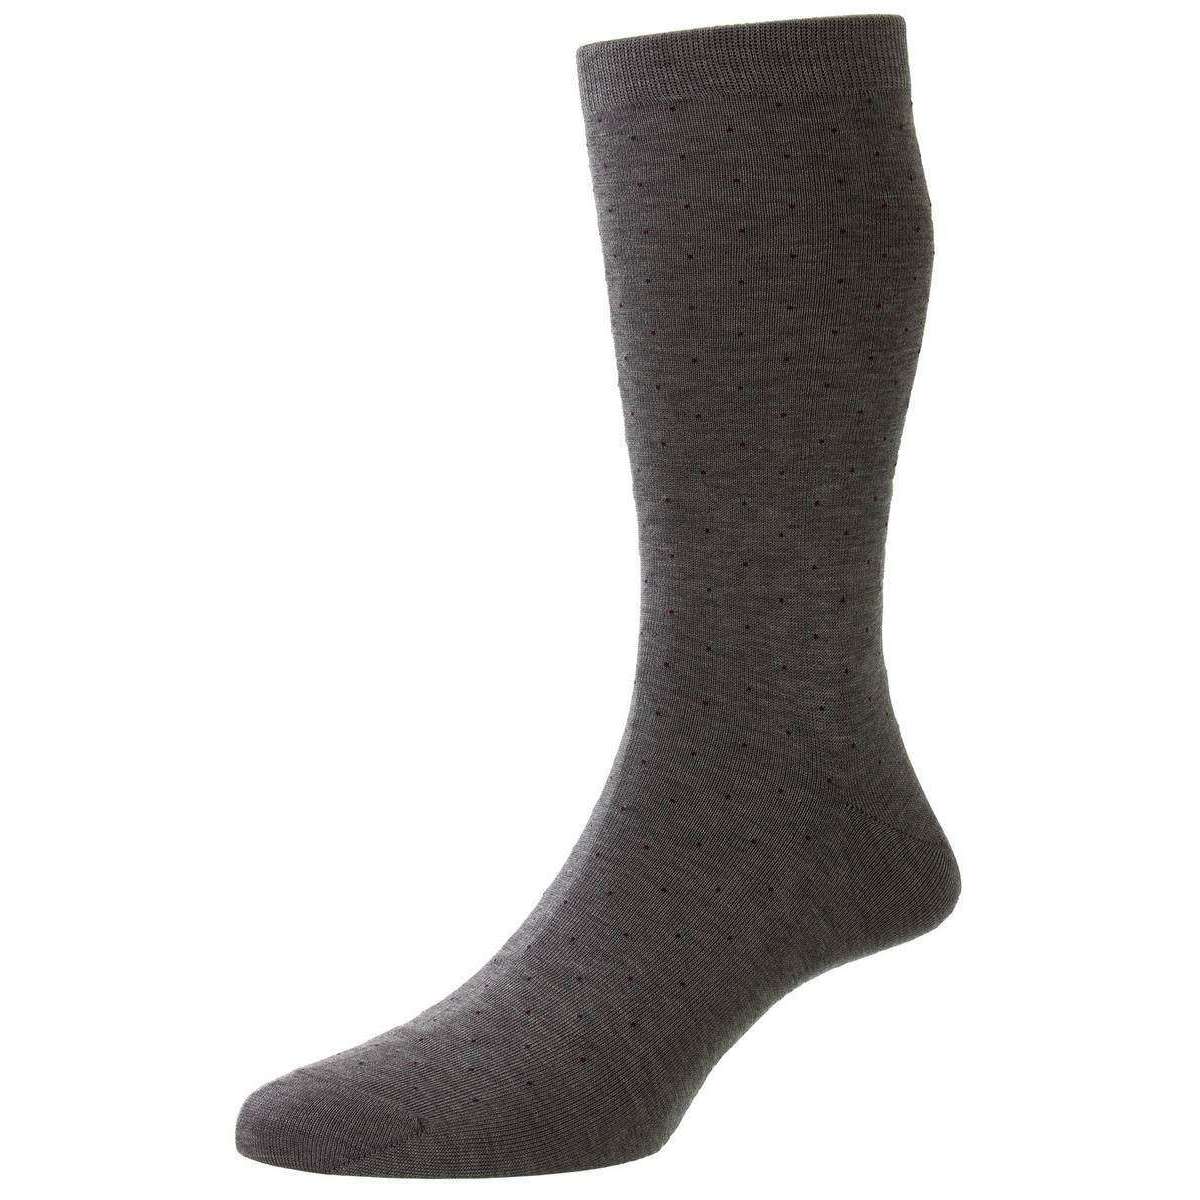 Pantherella Gadsbury Cotton Fil D’Ecosse Pin Dot Socks - Mid Grey Mix